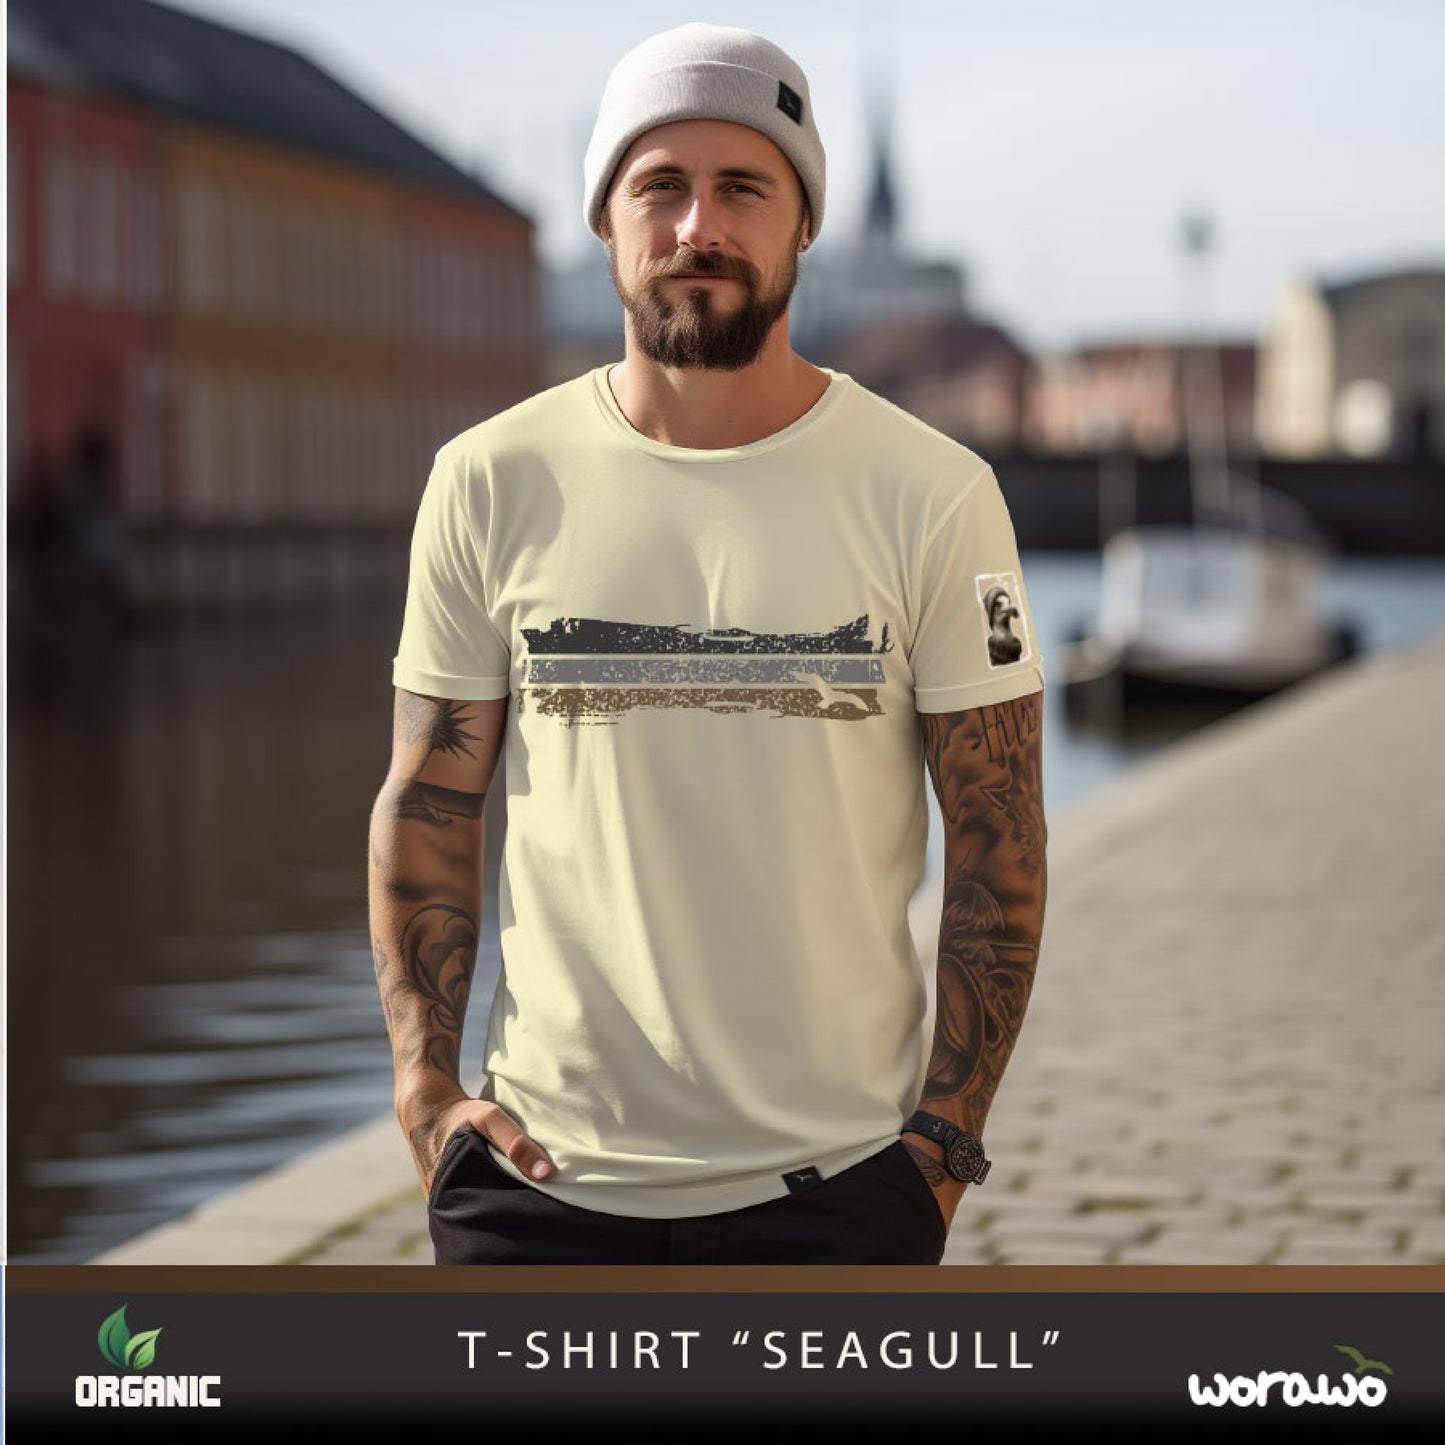 T-Shirt "Seagull"